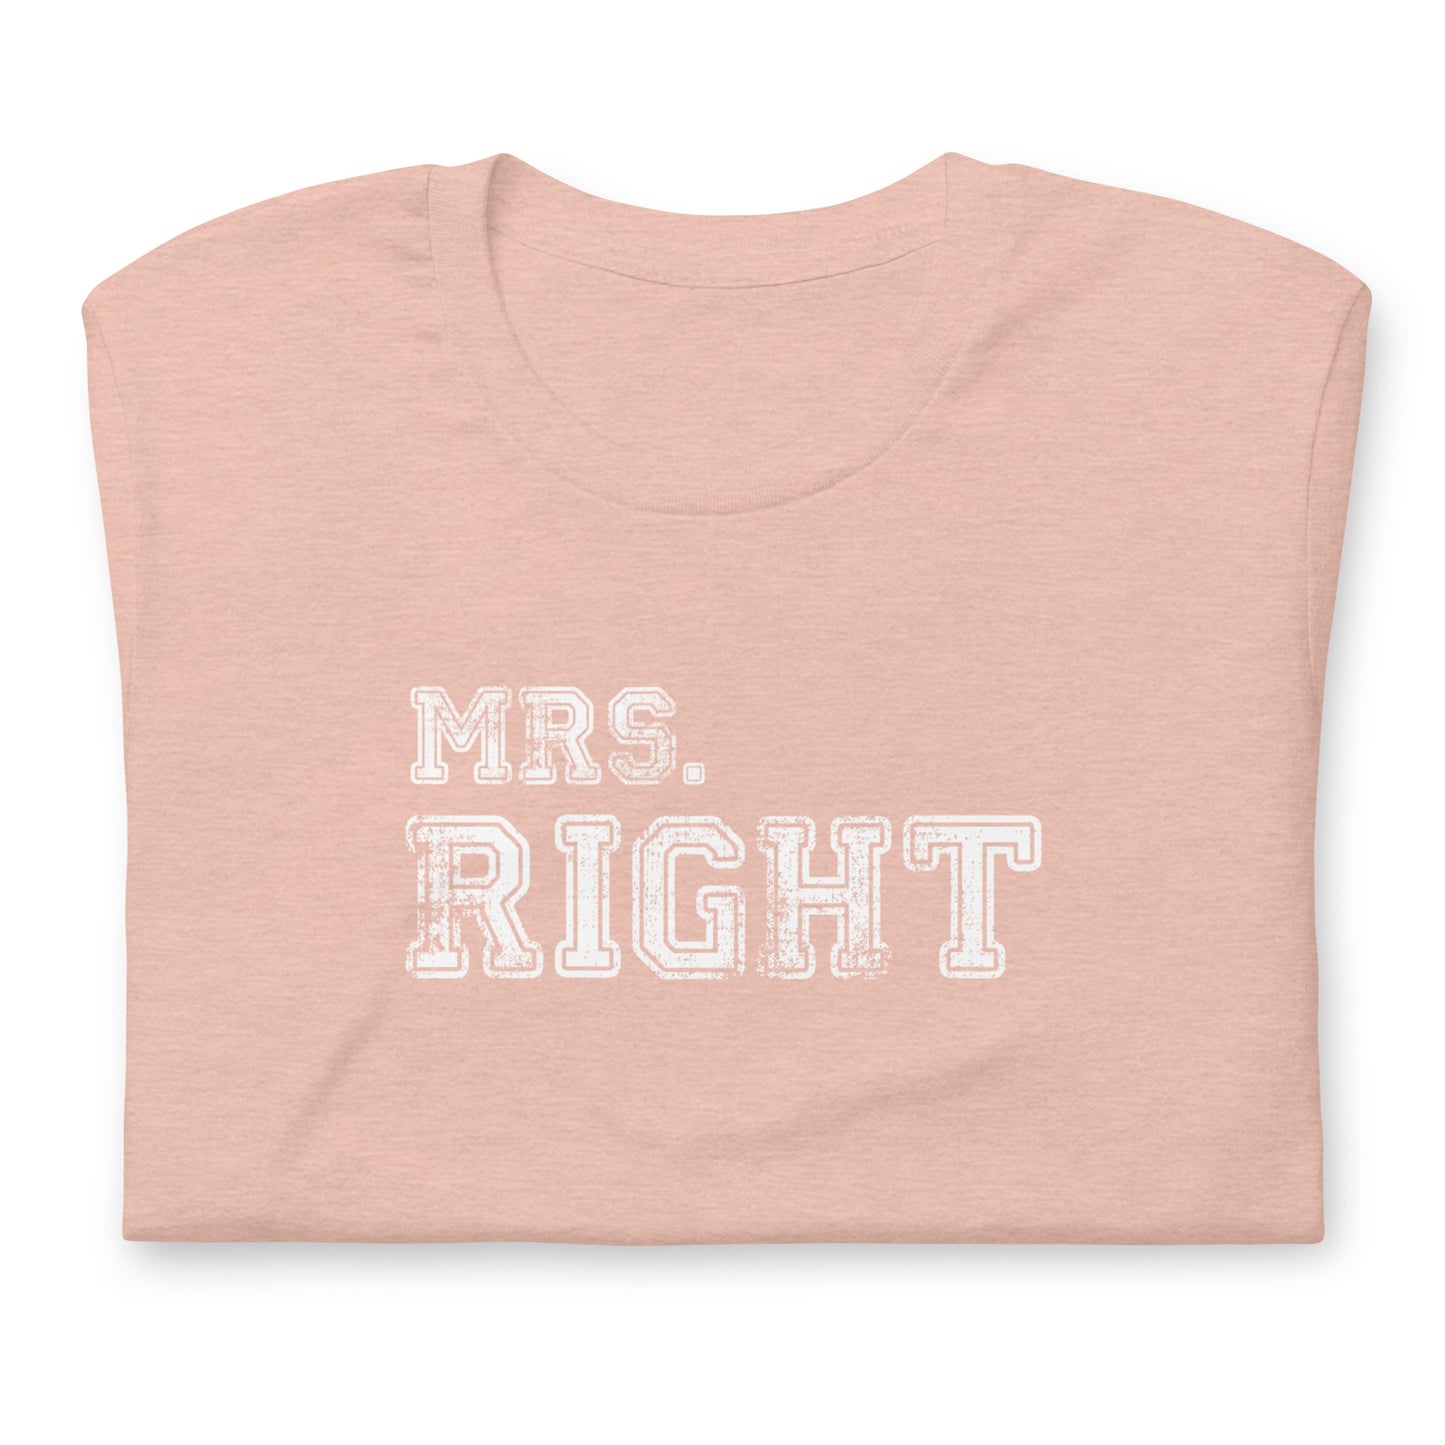 Mrs. Right Unisex t-shirt